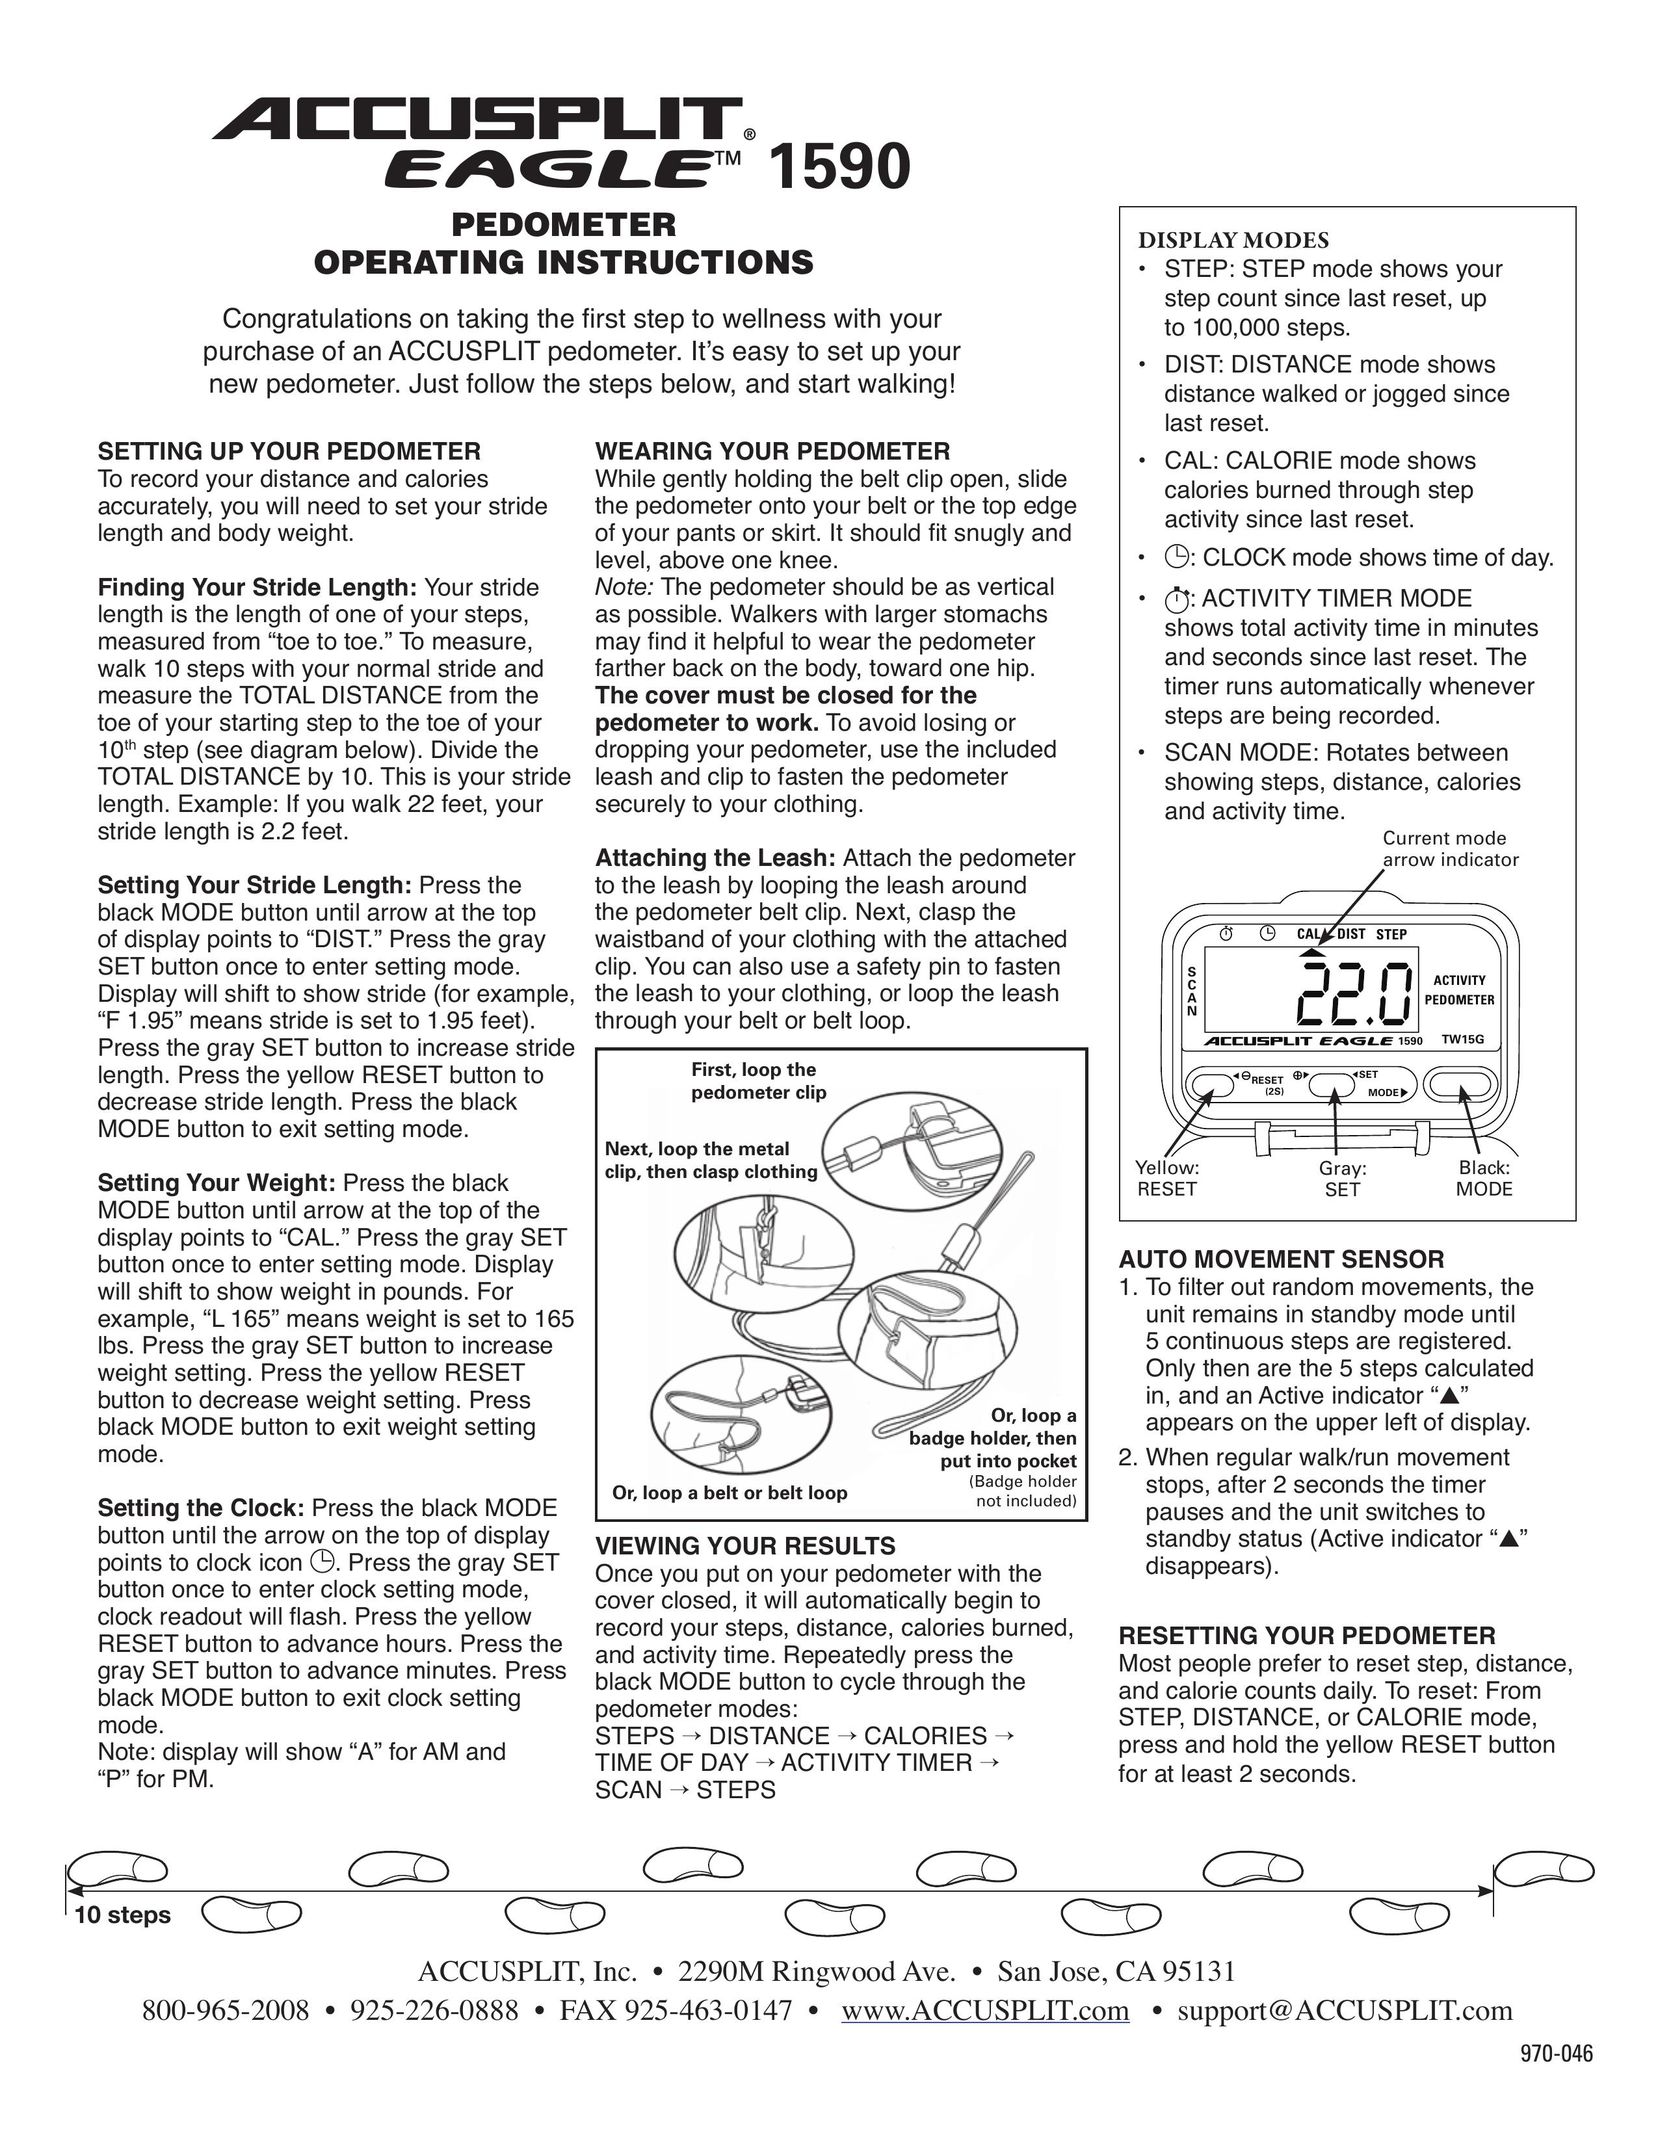 Accusplit 1590 Fitness Electronics User Manual